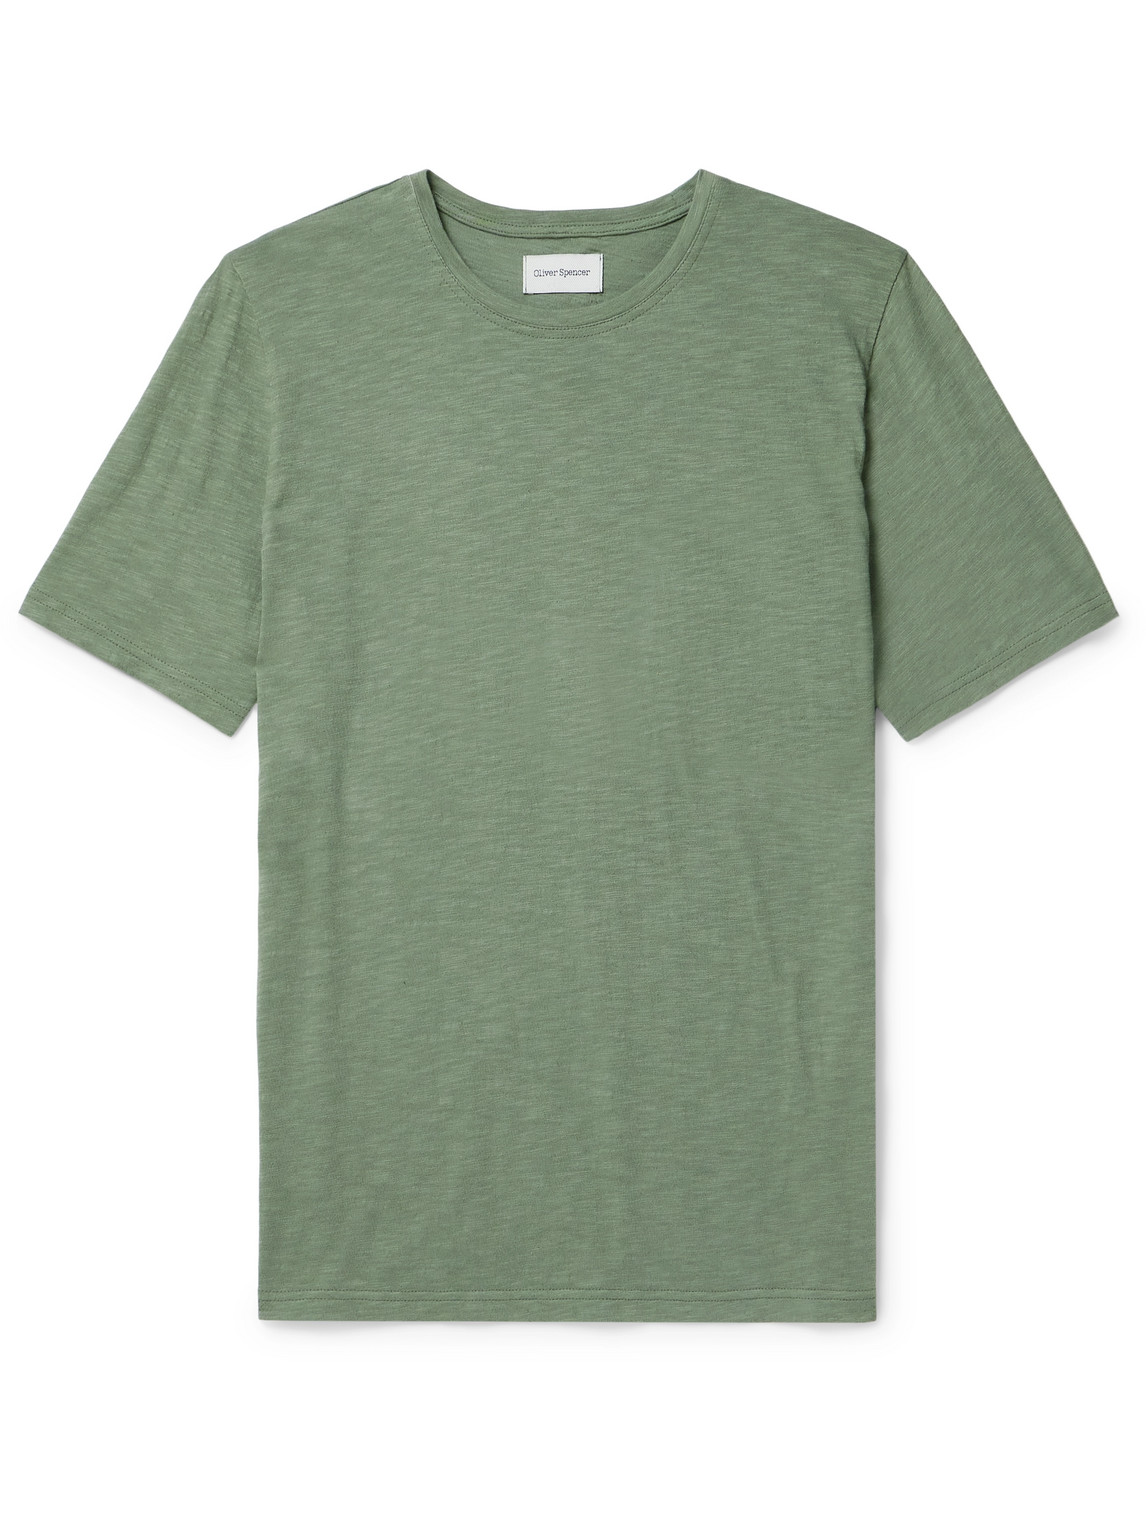 Oliver Spencer - Conduit Slub Cotton-Jersey T-Shirt - Men - Green - S von Oliver Spencer